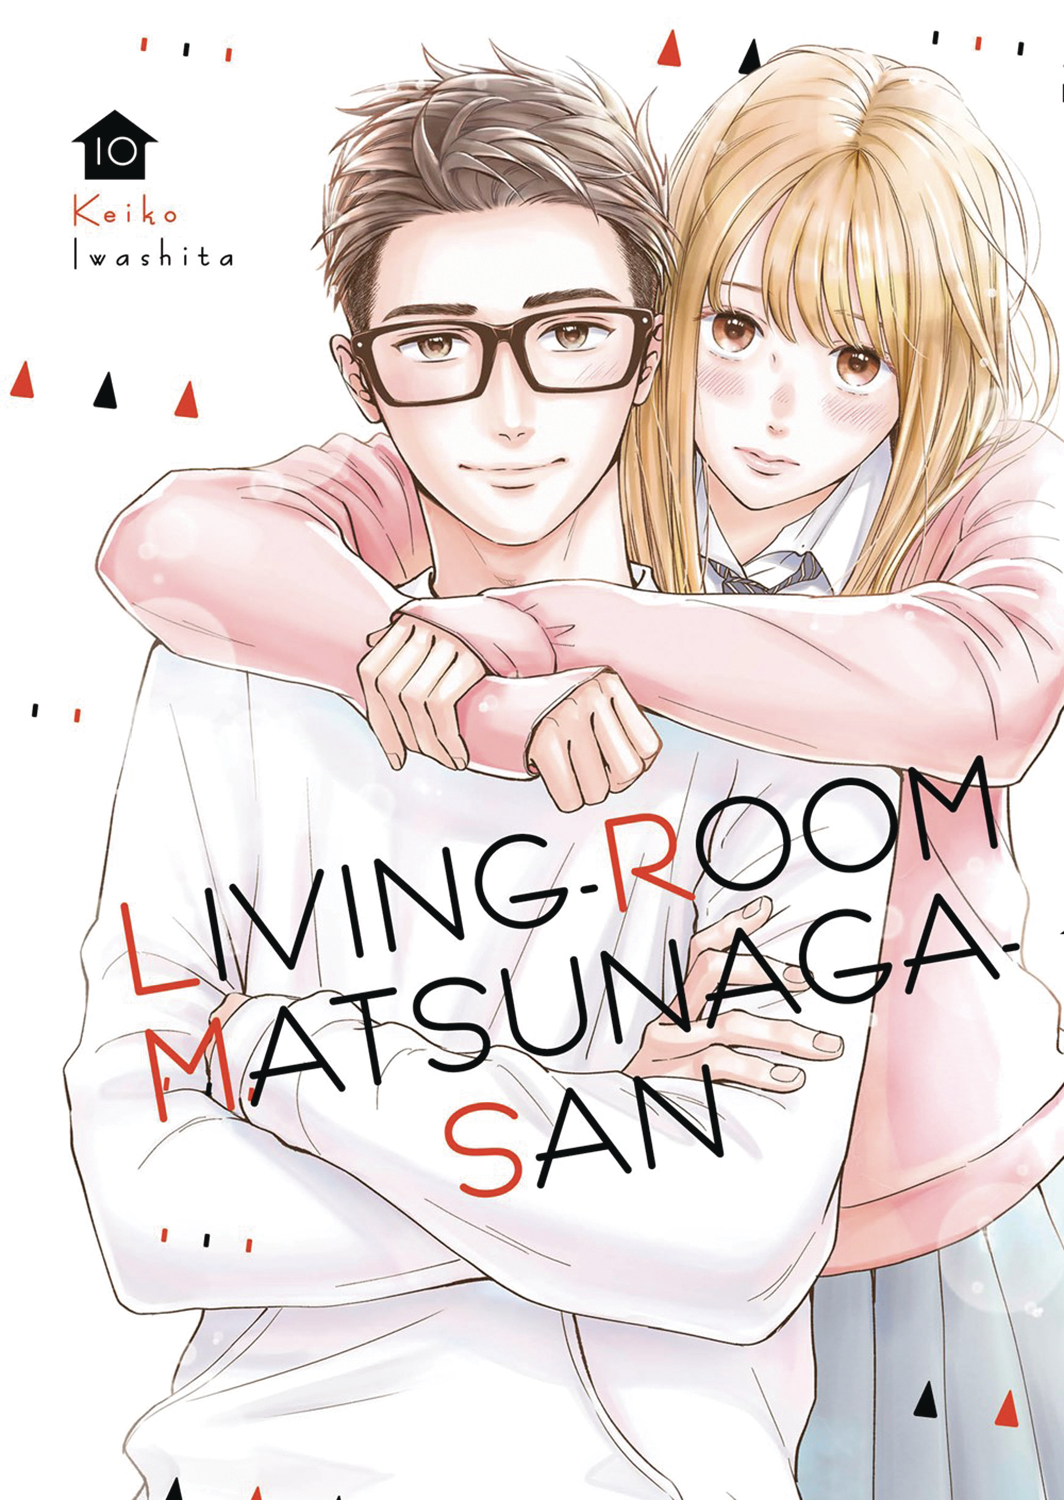 Living Room Matsunaga San Manga Volume 10